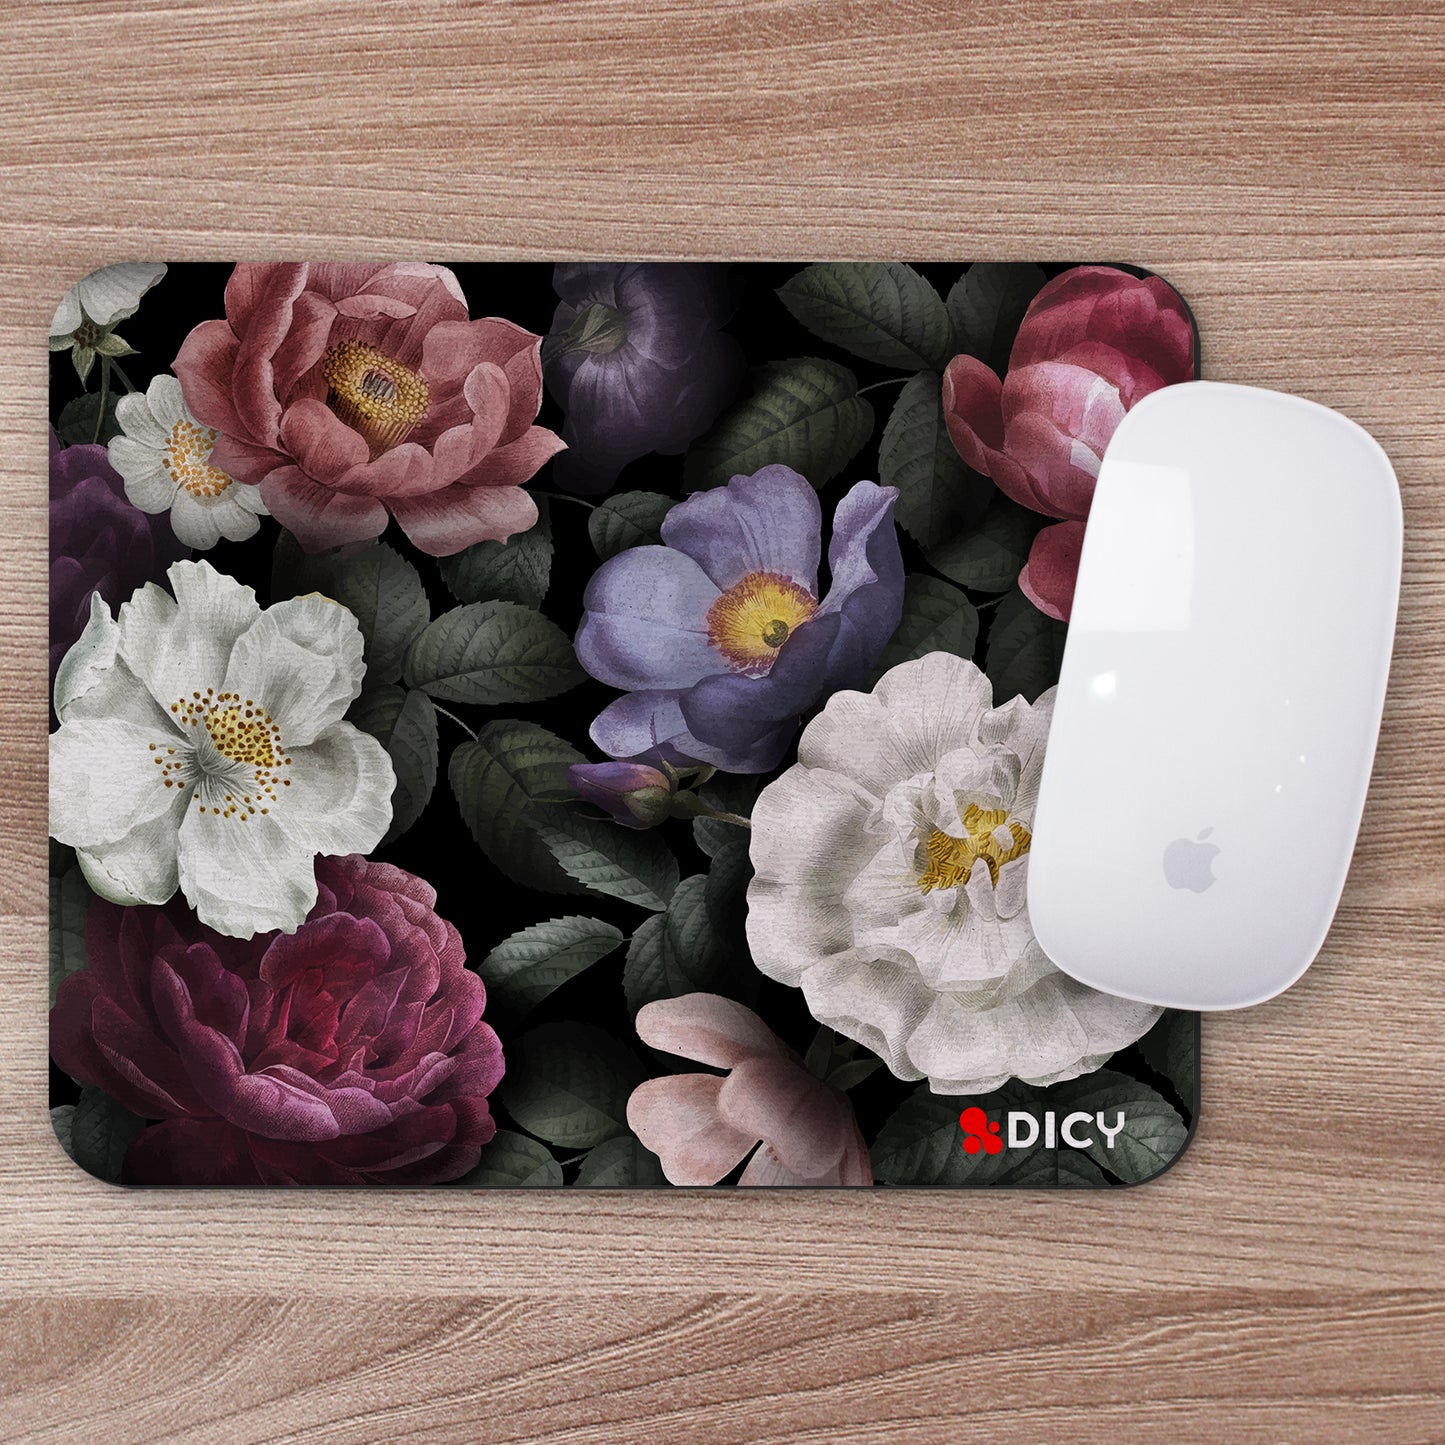 Mouse Pad for Laptop Desktop PC | Beautiful flower patterns